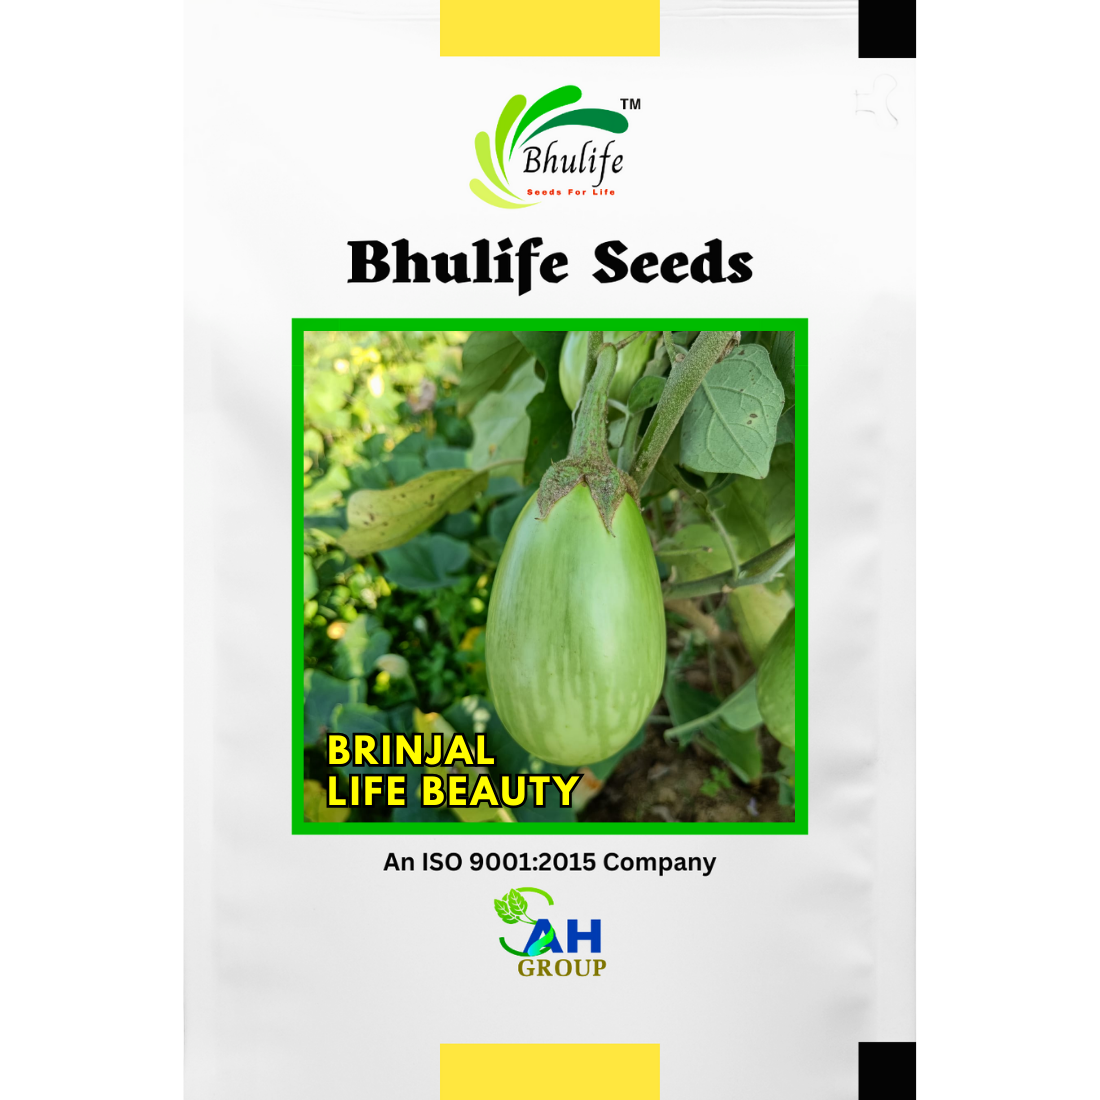 Bhulife Seeds Brinjal Seeds Life Beauty